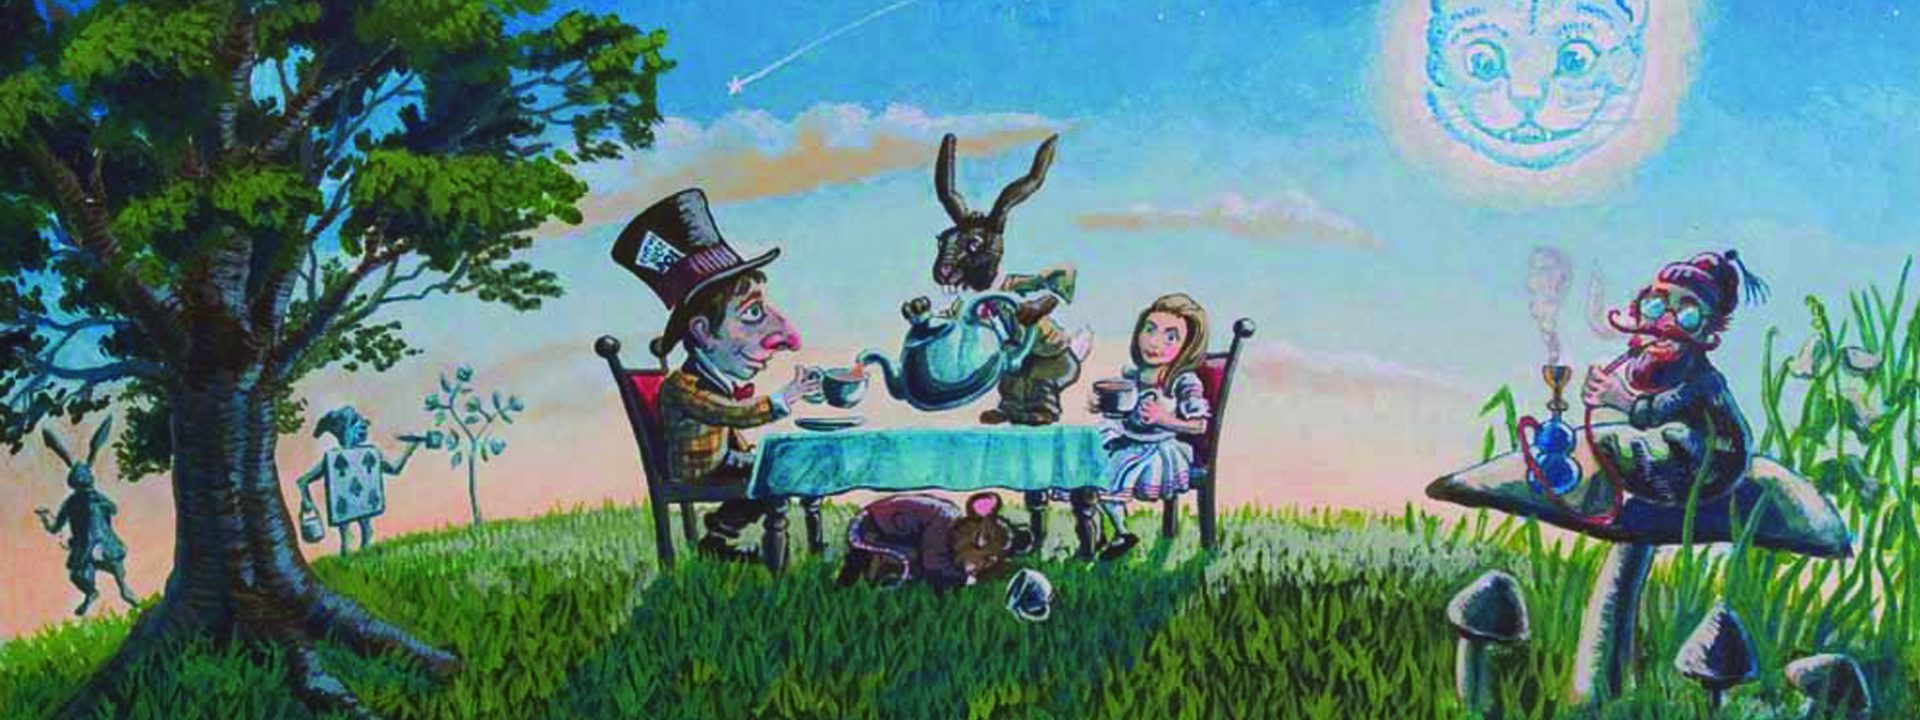 Outdoor Theatre: Alice's Adventures in Wonderland - CANCELLED